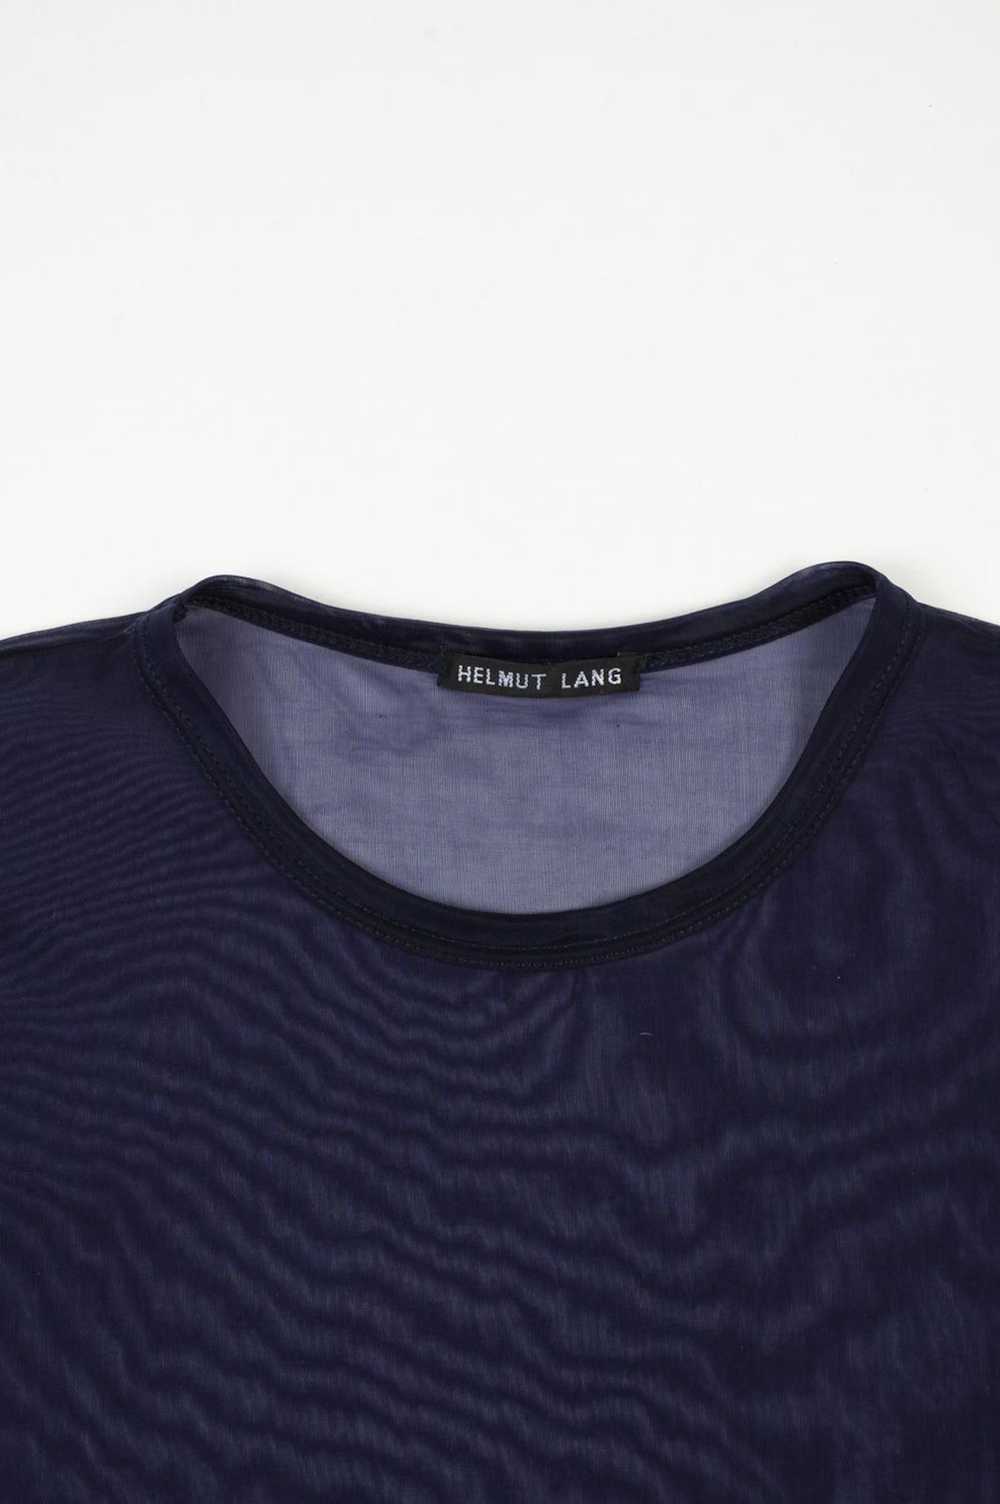 Helmut Lang Helmut Lang Men T-Shirt Transparent - image 2